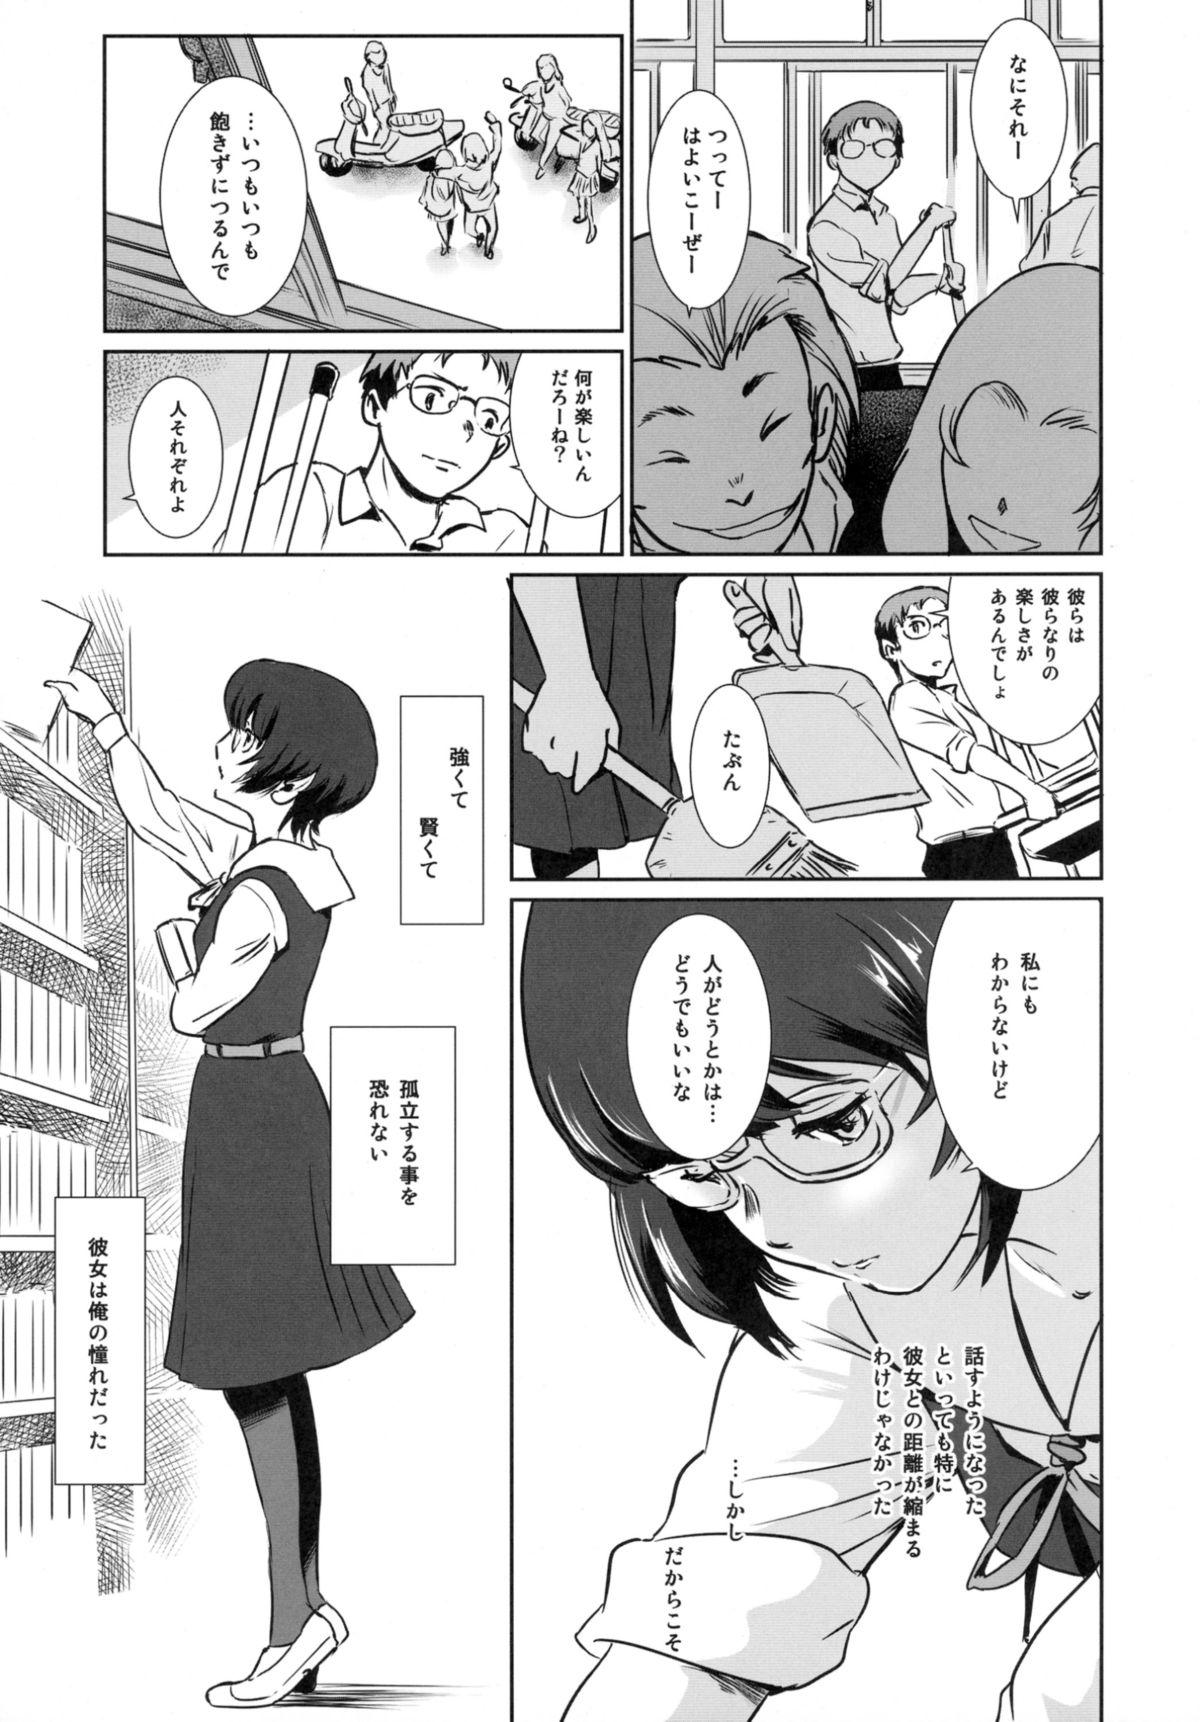 Story of the 'N' Situation - Situation#3 Mukashi no Otoko 8